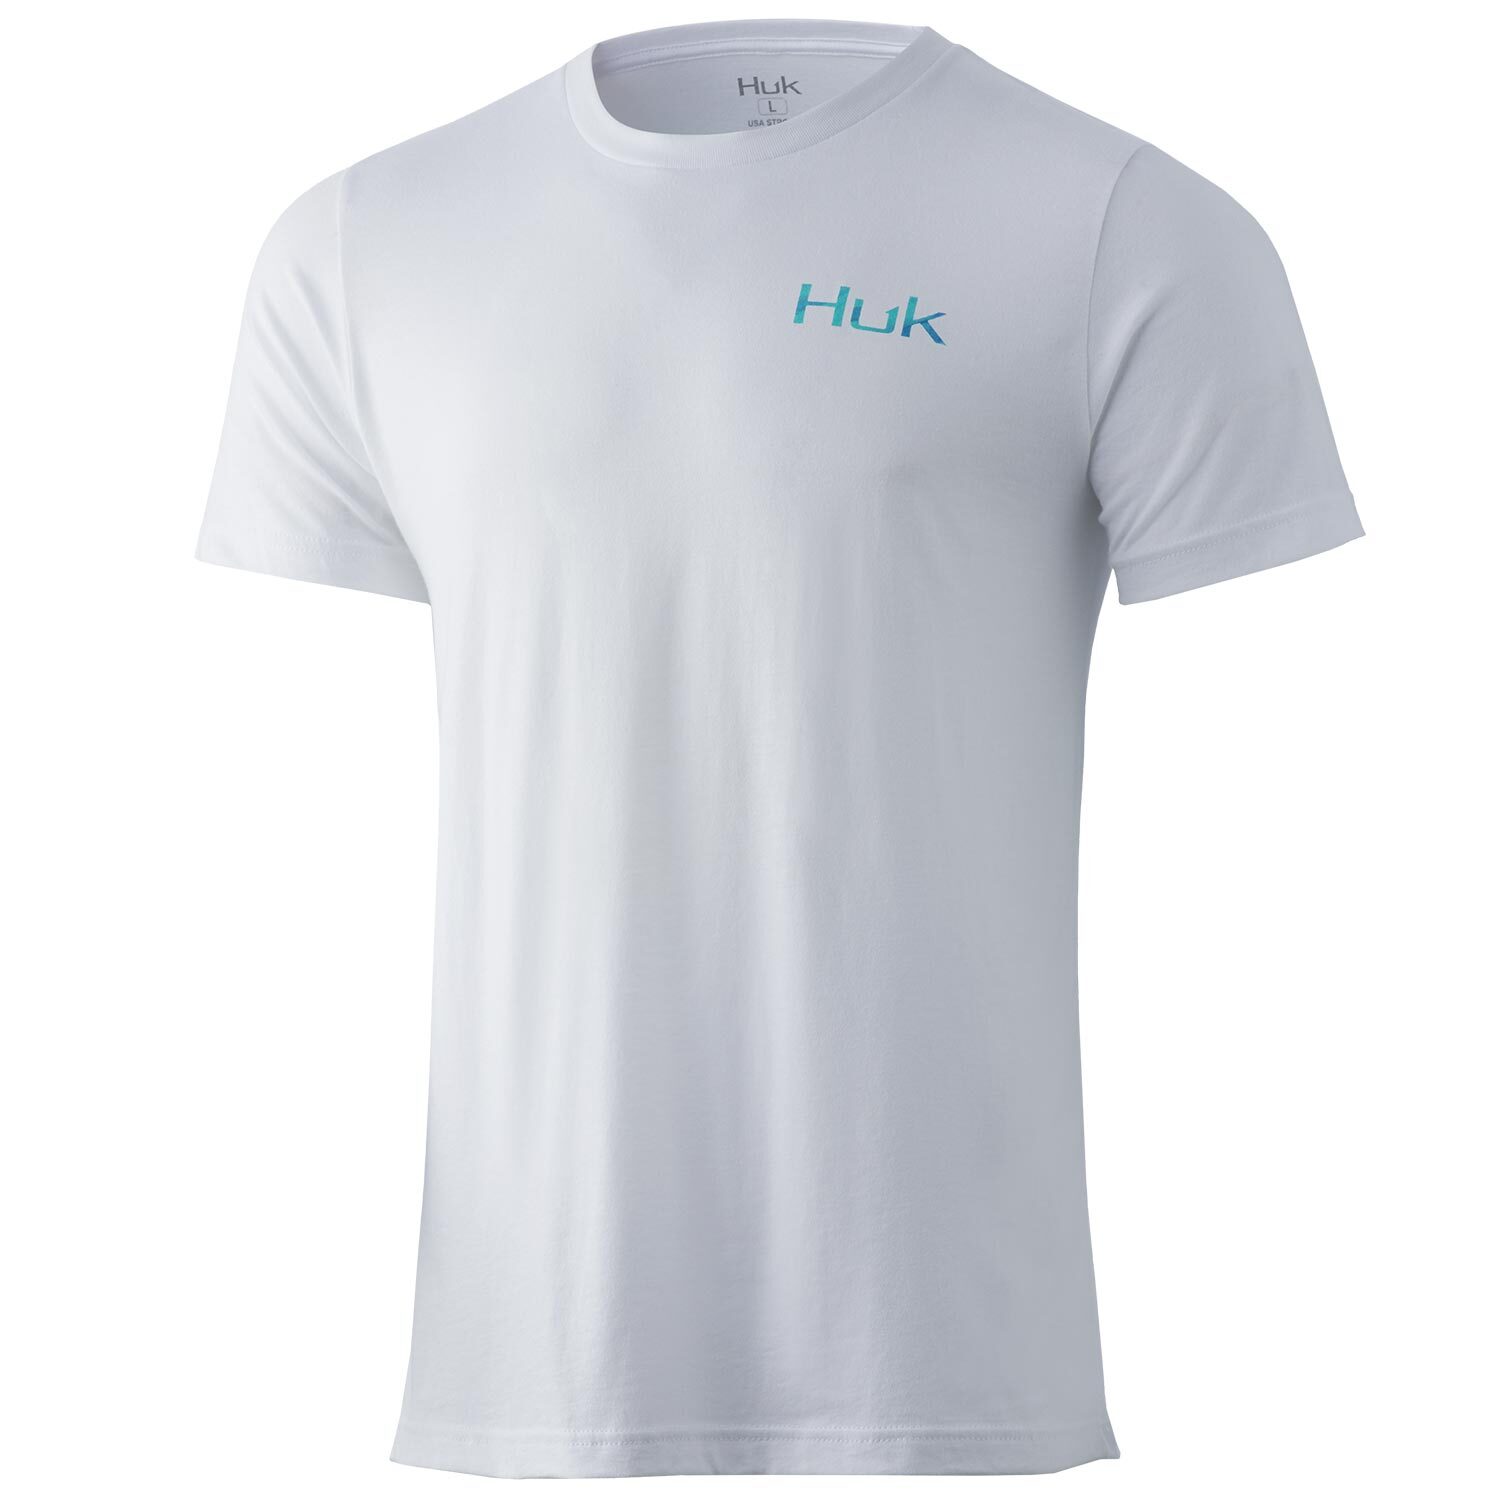 HUK Men's Marlin Badge Shirt